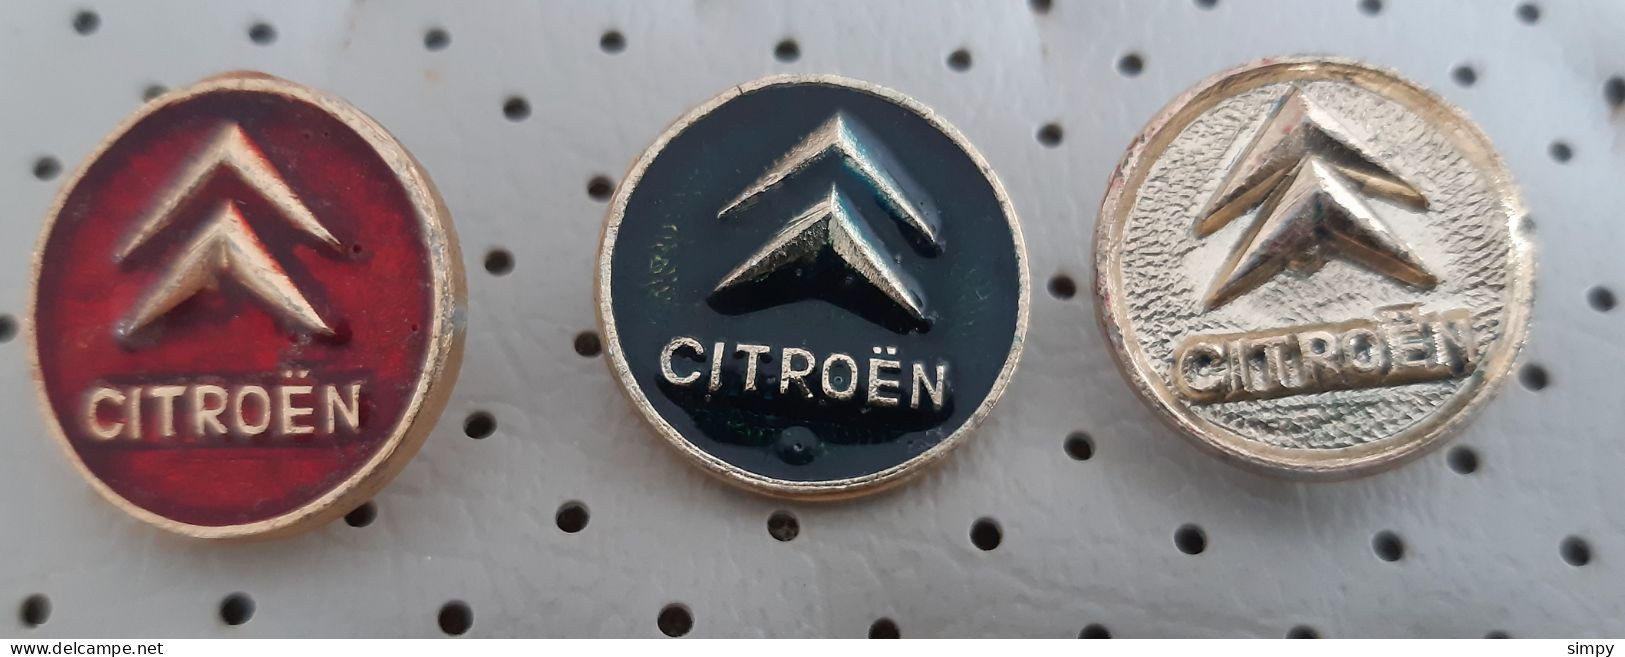 Citroën - CITROEN car logo vintage pins